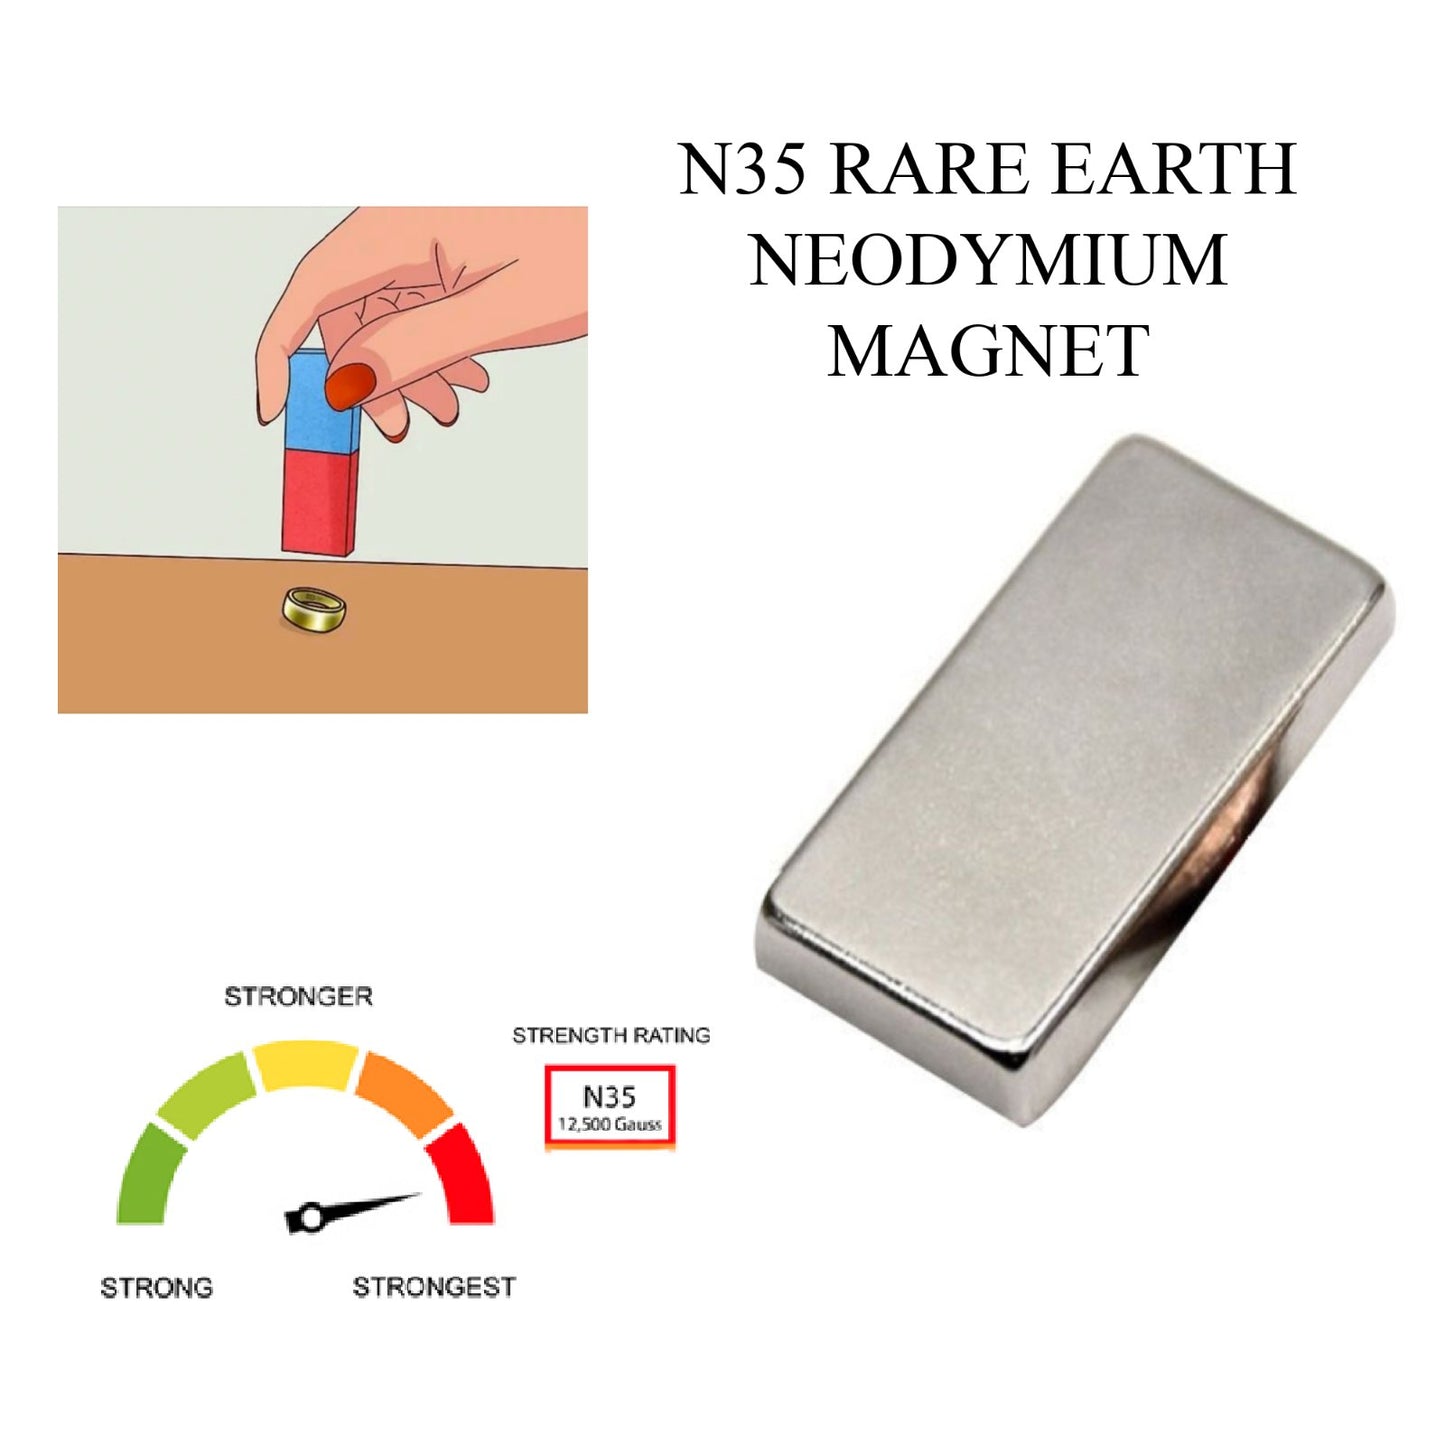 JSP Gold Testing Acid 10K 14K 18K Test Kit + Scratch Tester Stone + Rare Earth Magnet Jewelry Test Detect Precious Metals